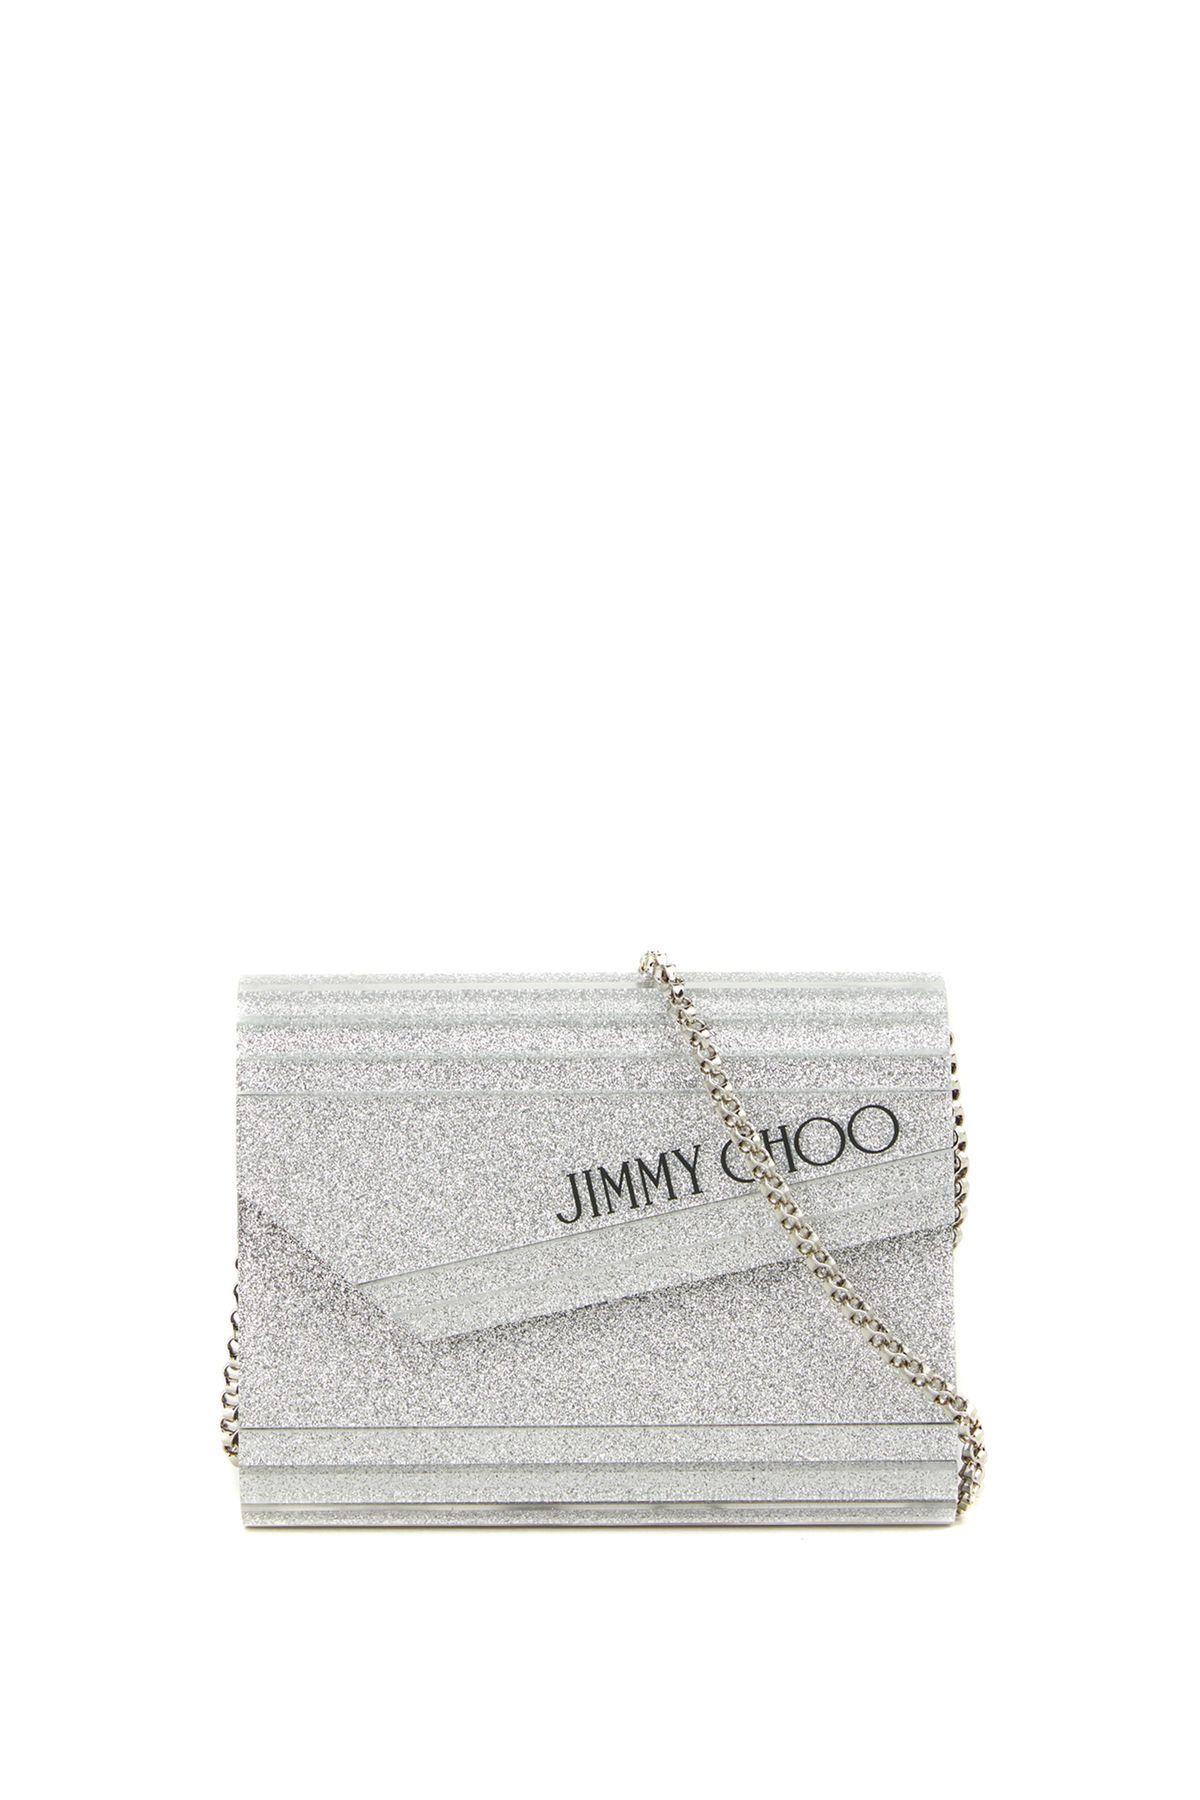 Jimmy Choo Candy Silver Kadın Çanta